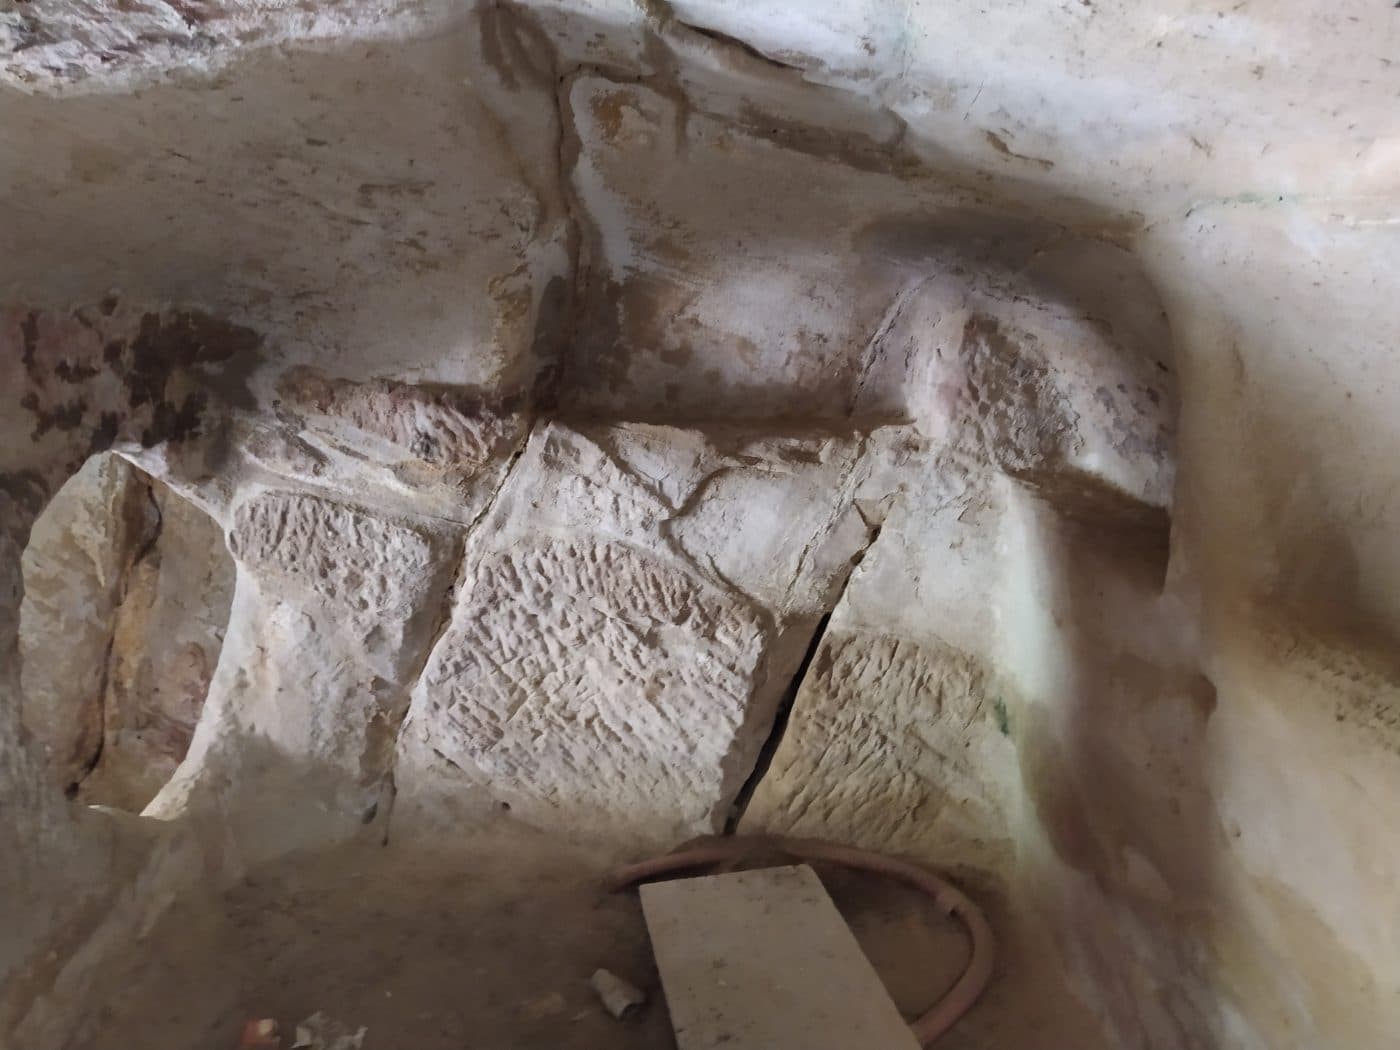 Riscos de Bilibio (VII): la iglesia rupestre de Páceta 8